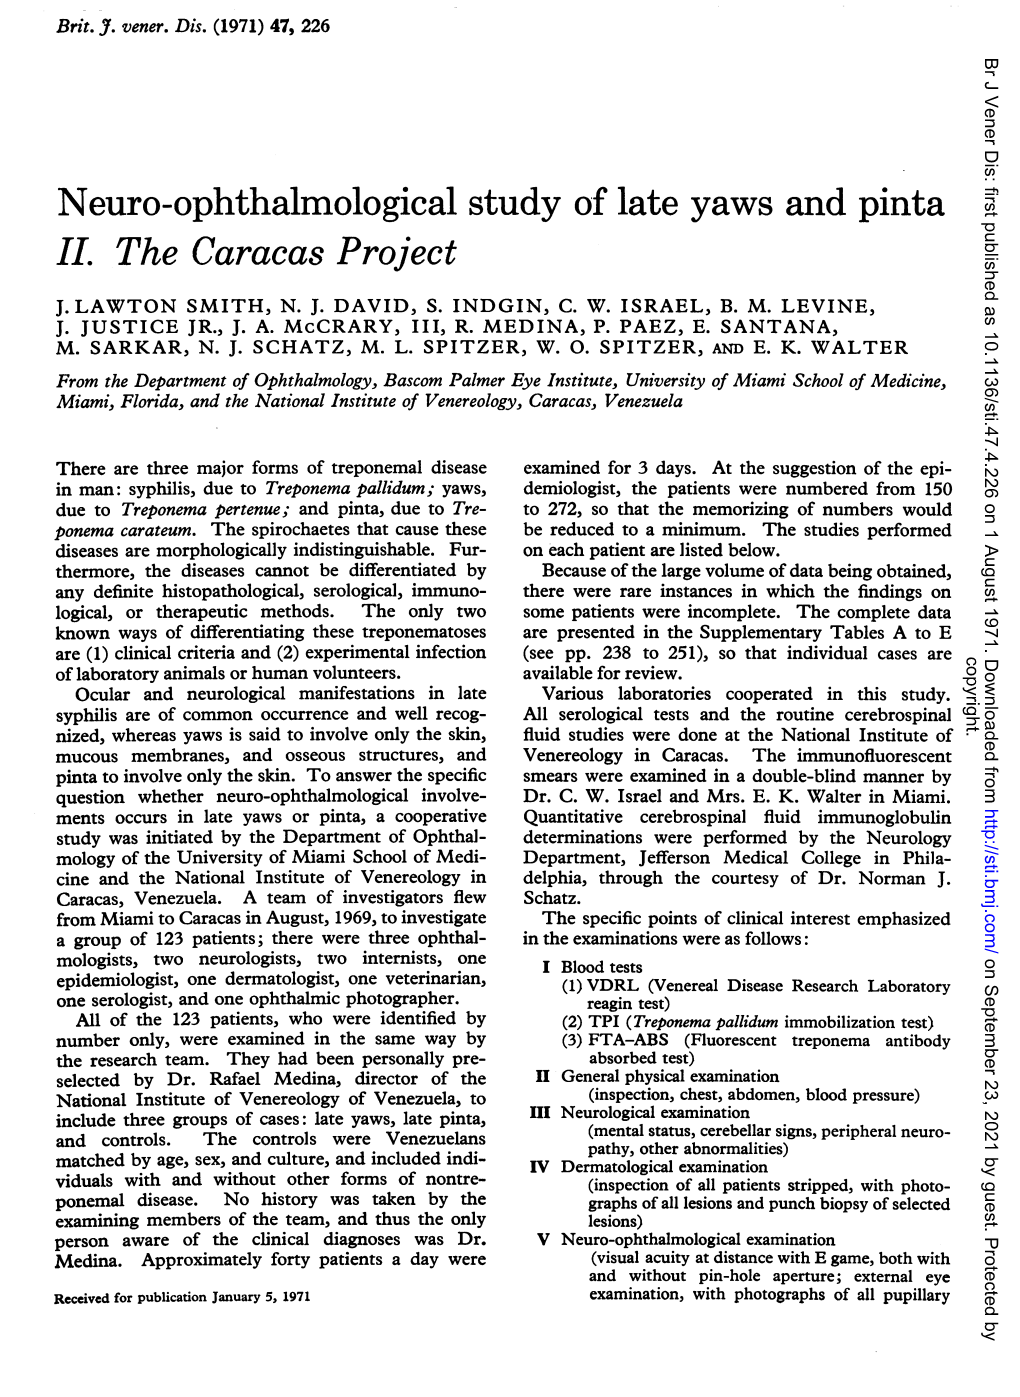 Neuro-Ophthalmological Study of Late Yaws and Pinta II